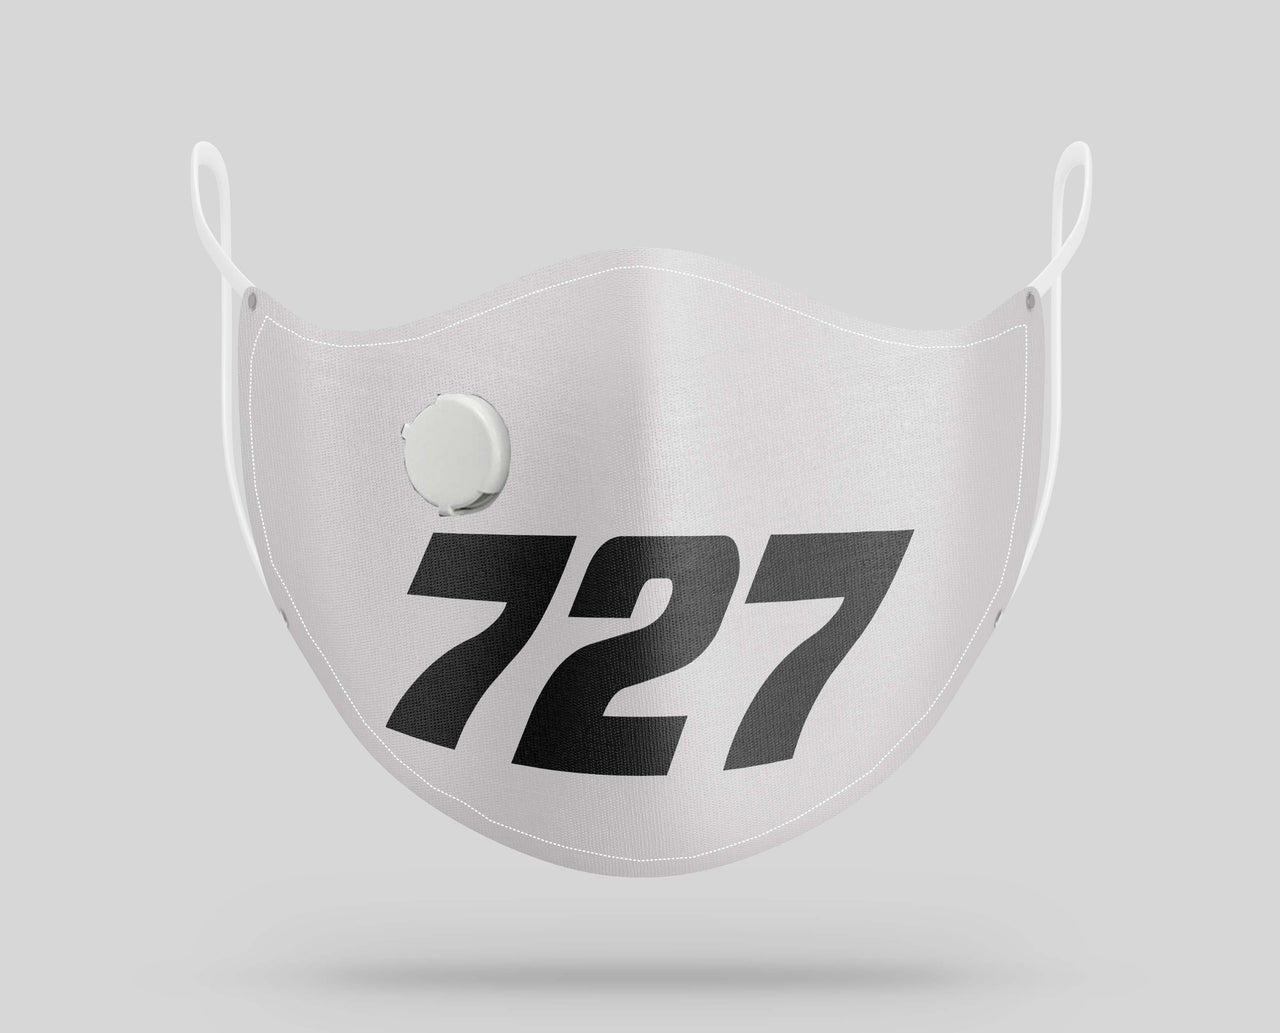 Boeing 727 Text Designed Face Masks